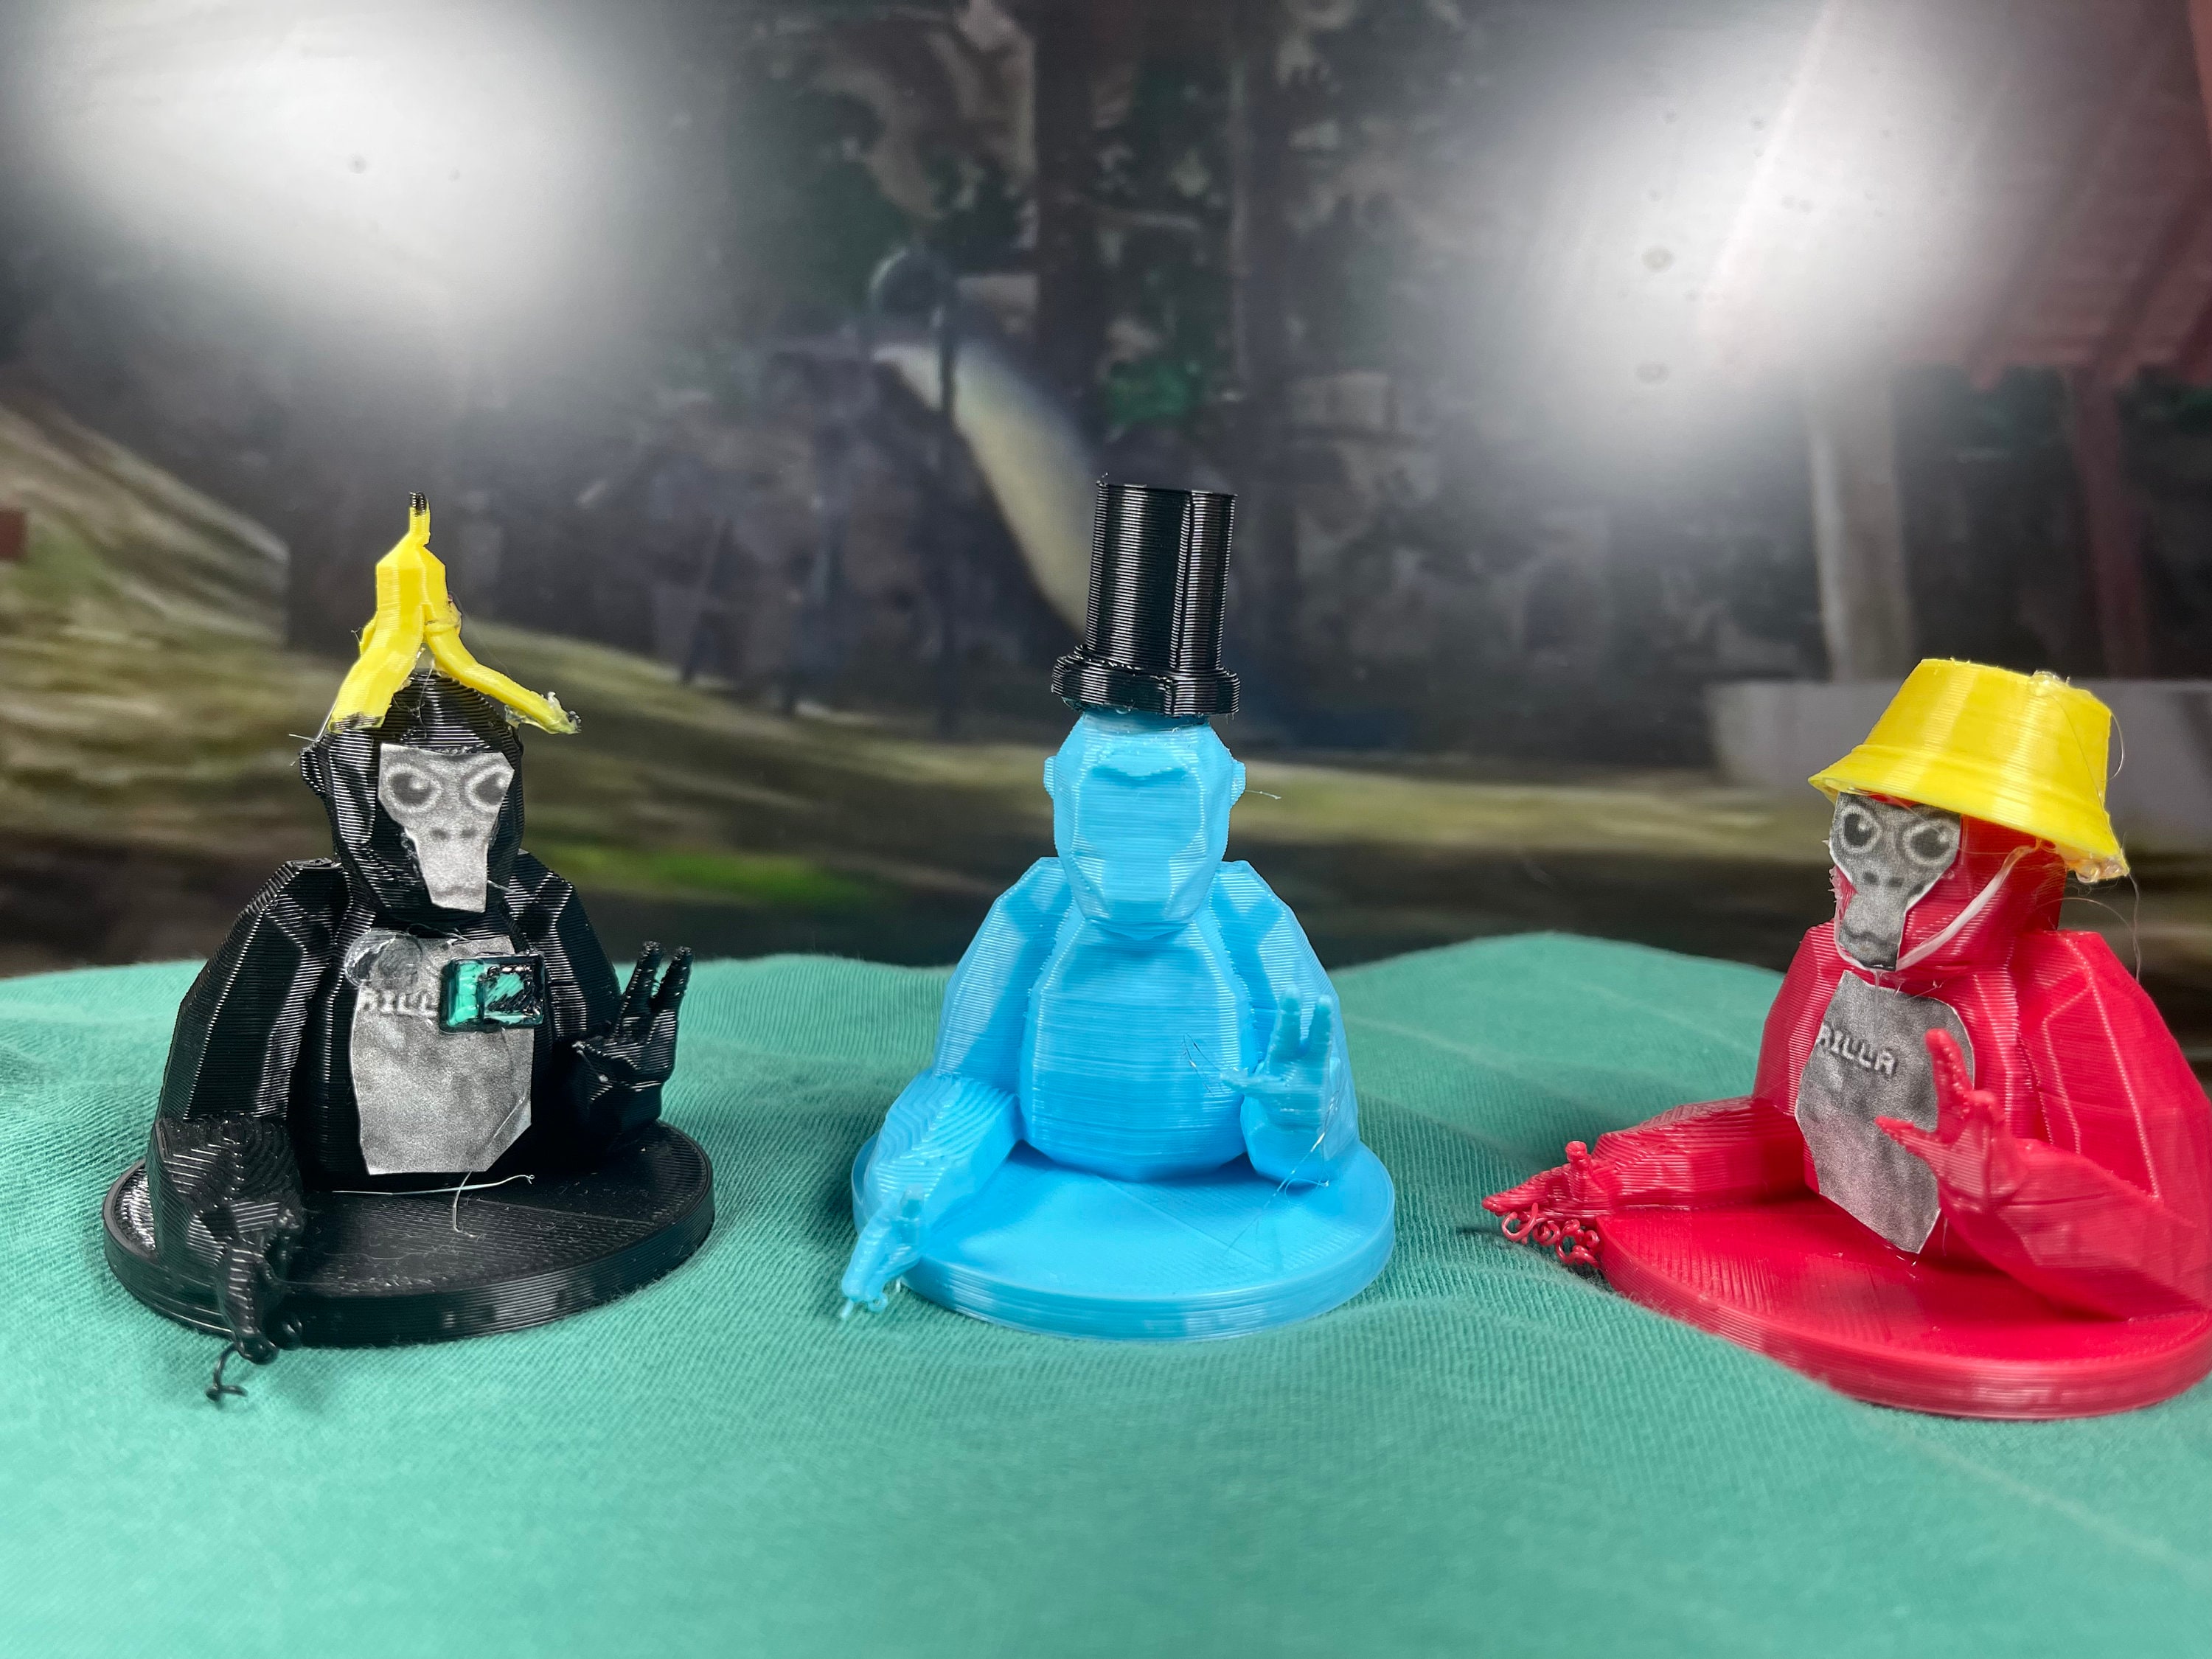 zkqeuak Gorilla Tag Plush Gorilla Tags Stuffed Animal Plushie for Game  Lovers and Kids Friends Gifts 3PCS